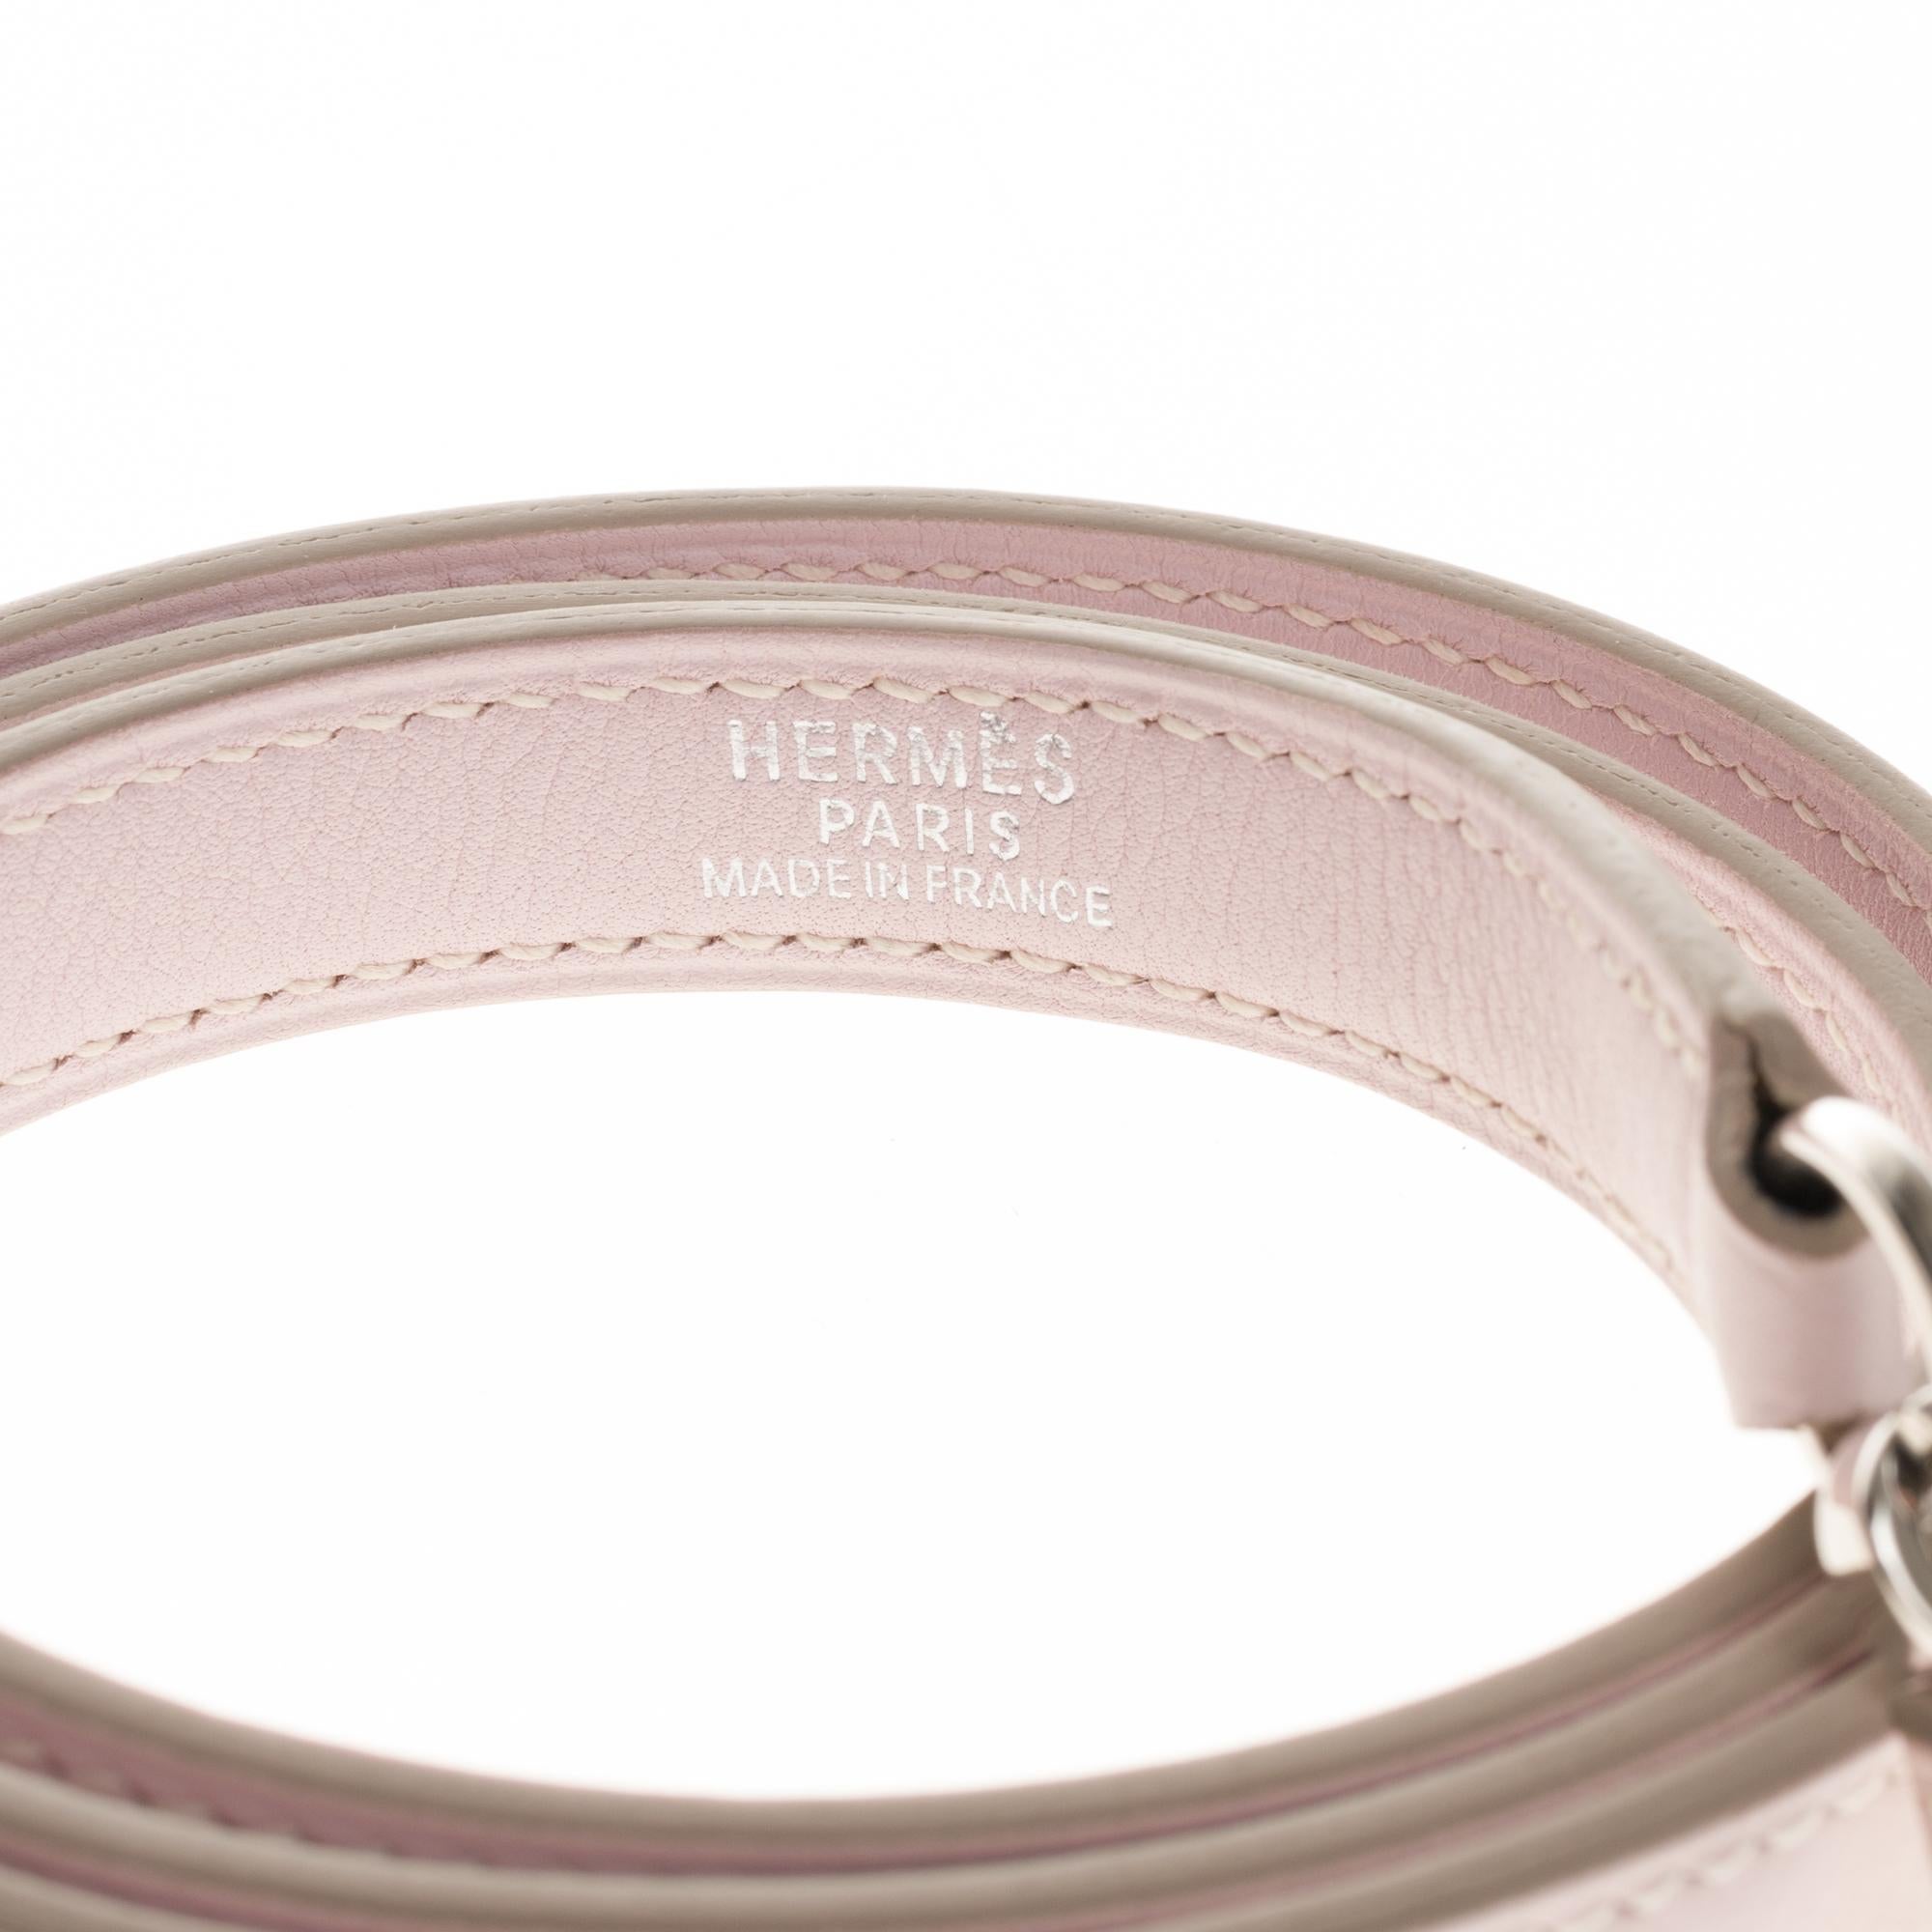 Hermes bag strap in Swift leather color Rose Sakura.
Palladium silver metal trim.
Signature: 